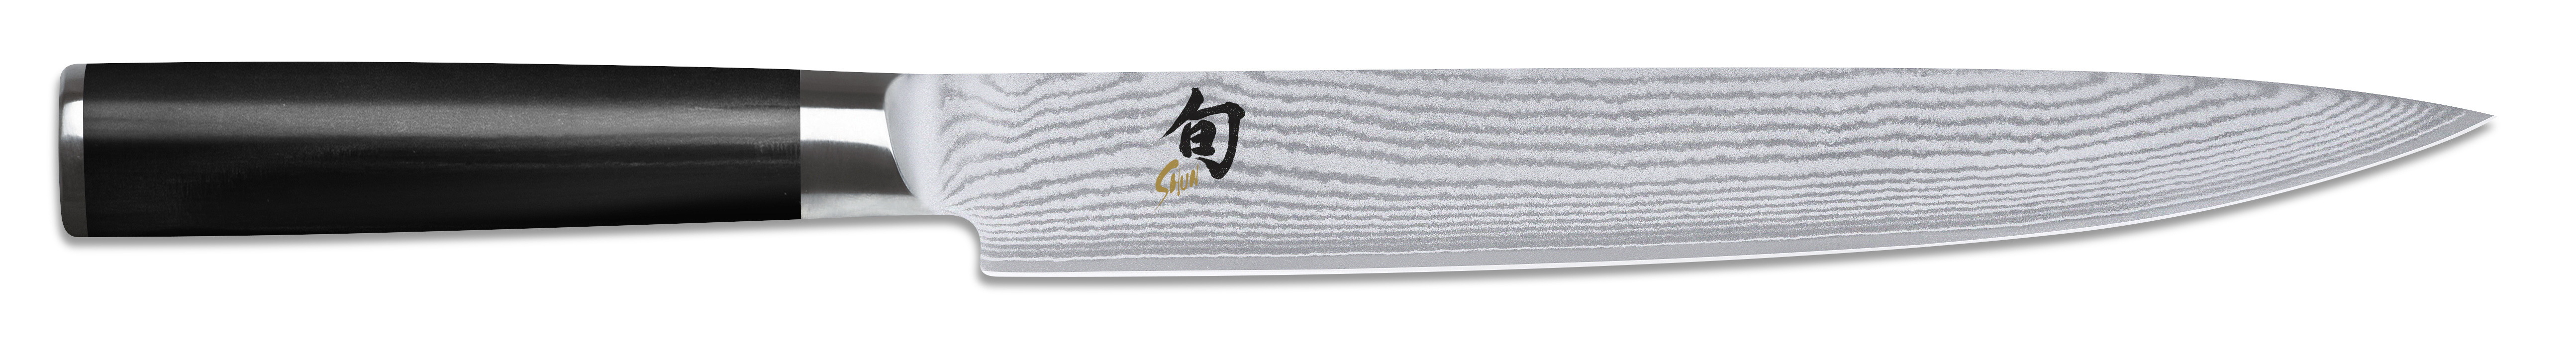 KAI - DM-0704: SHUN Kochmesser/Cook Knife Schinkenmesser 9,0 (22,5 cm)